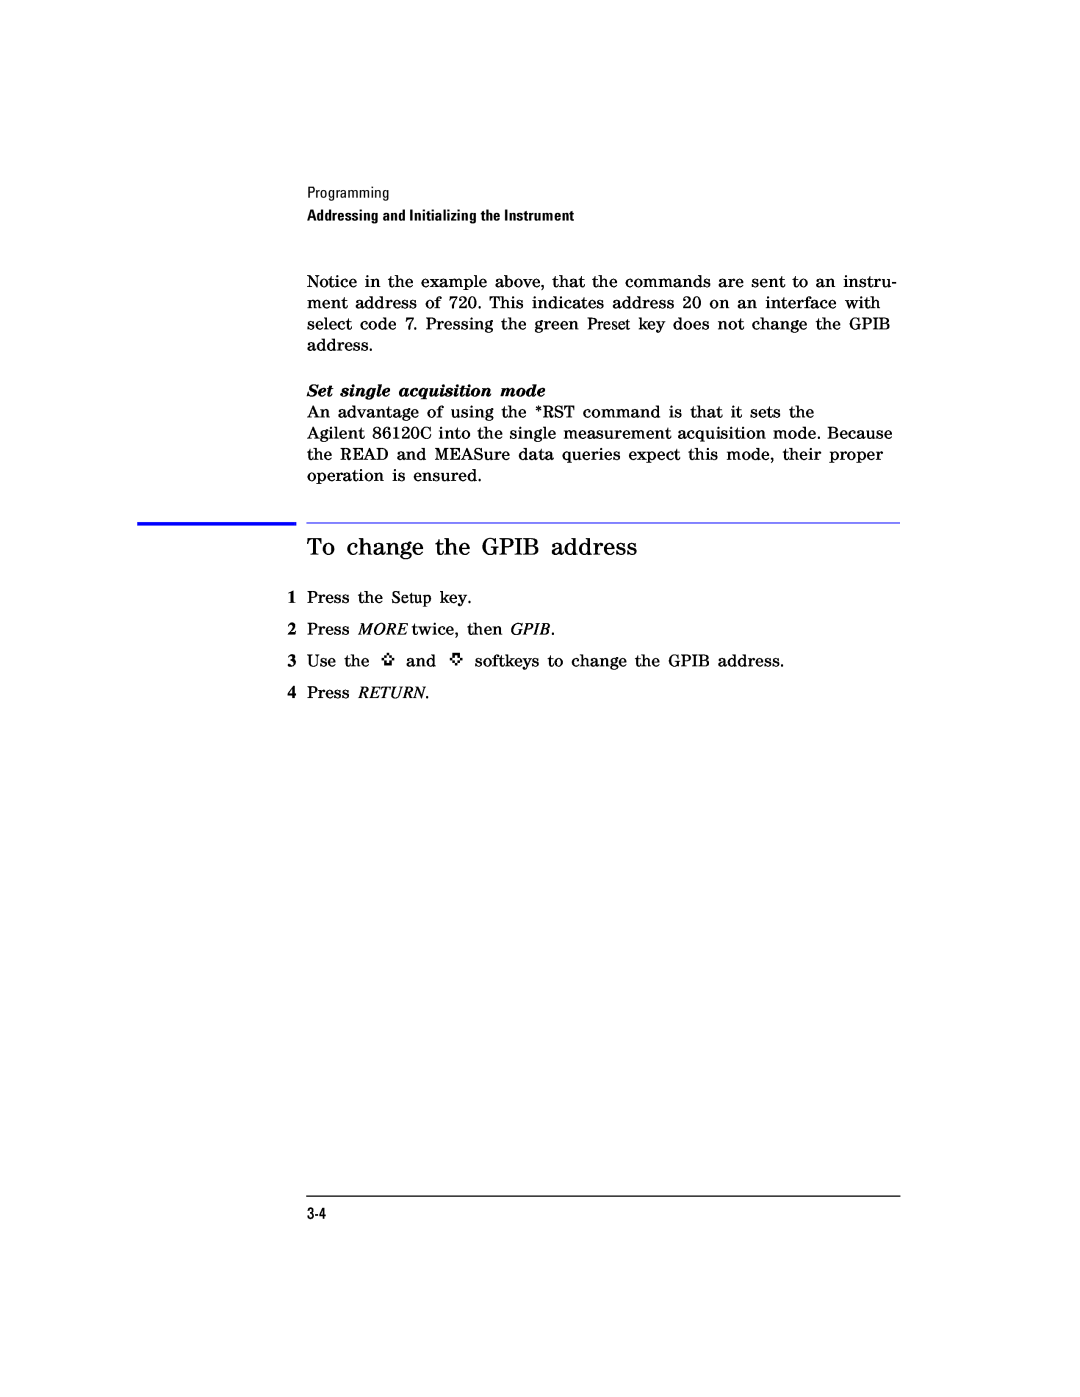 Agilent Technologies Agilent 86120C manual To change the GPIB address, Set single acquisition mode 